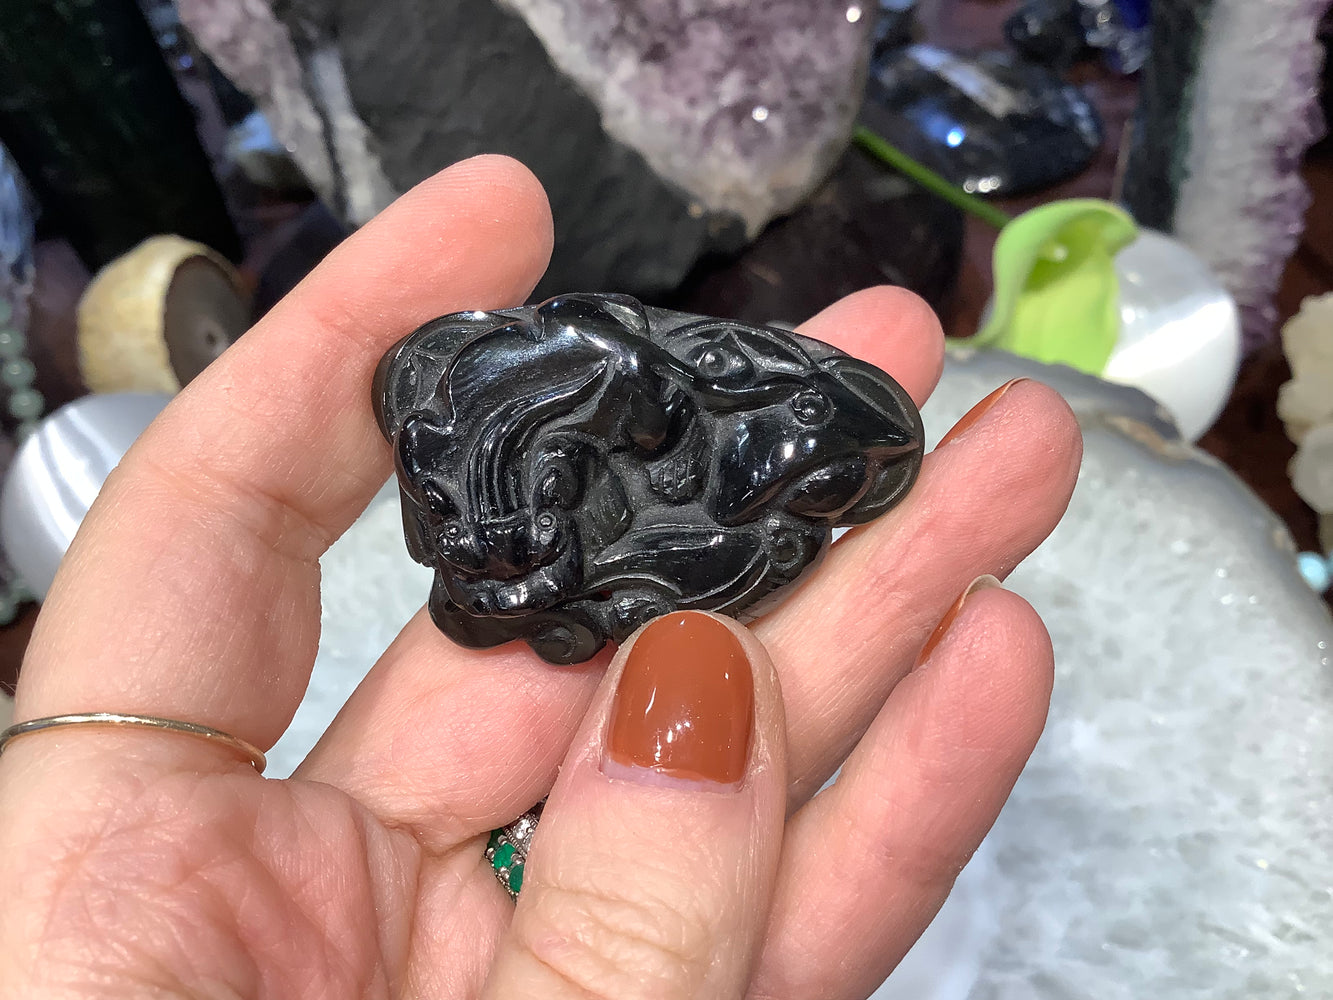 Rainbow obsidian carved dragon heart gemstone pendant